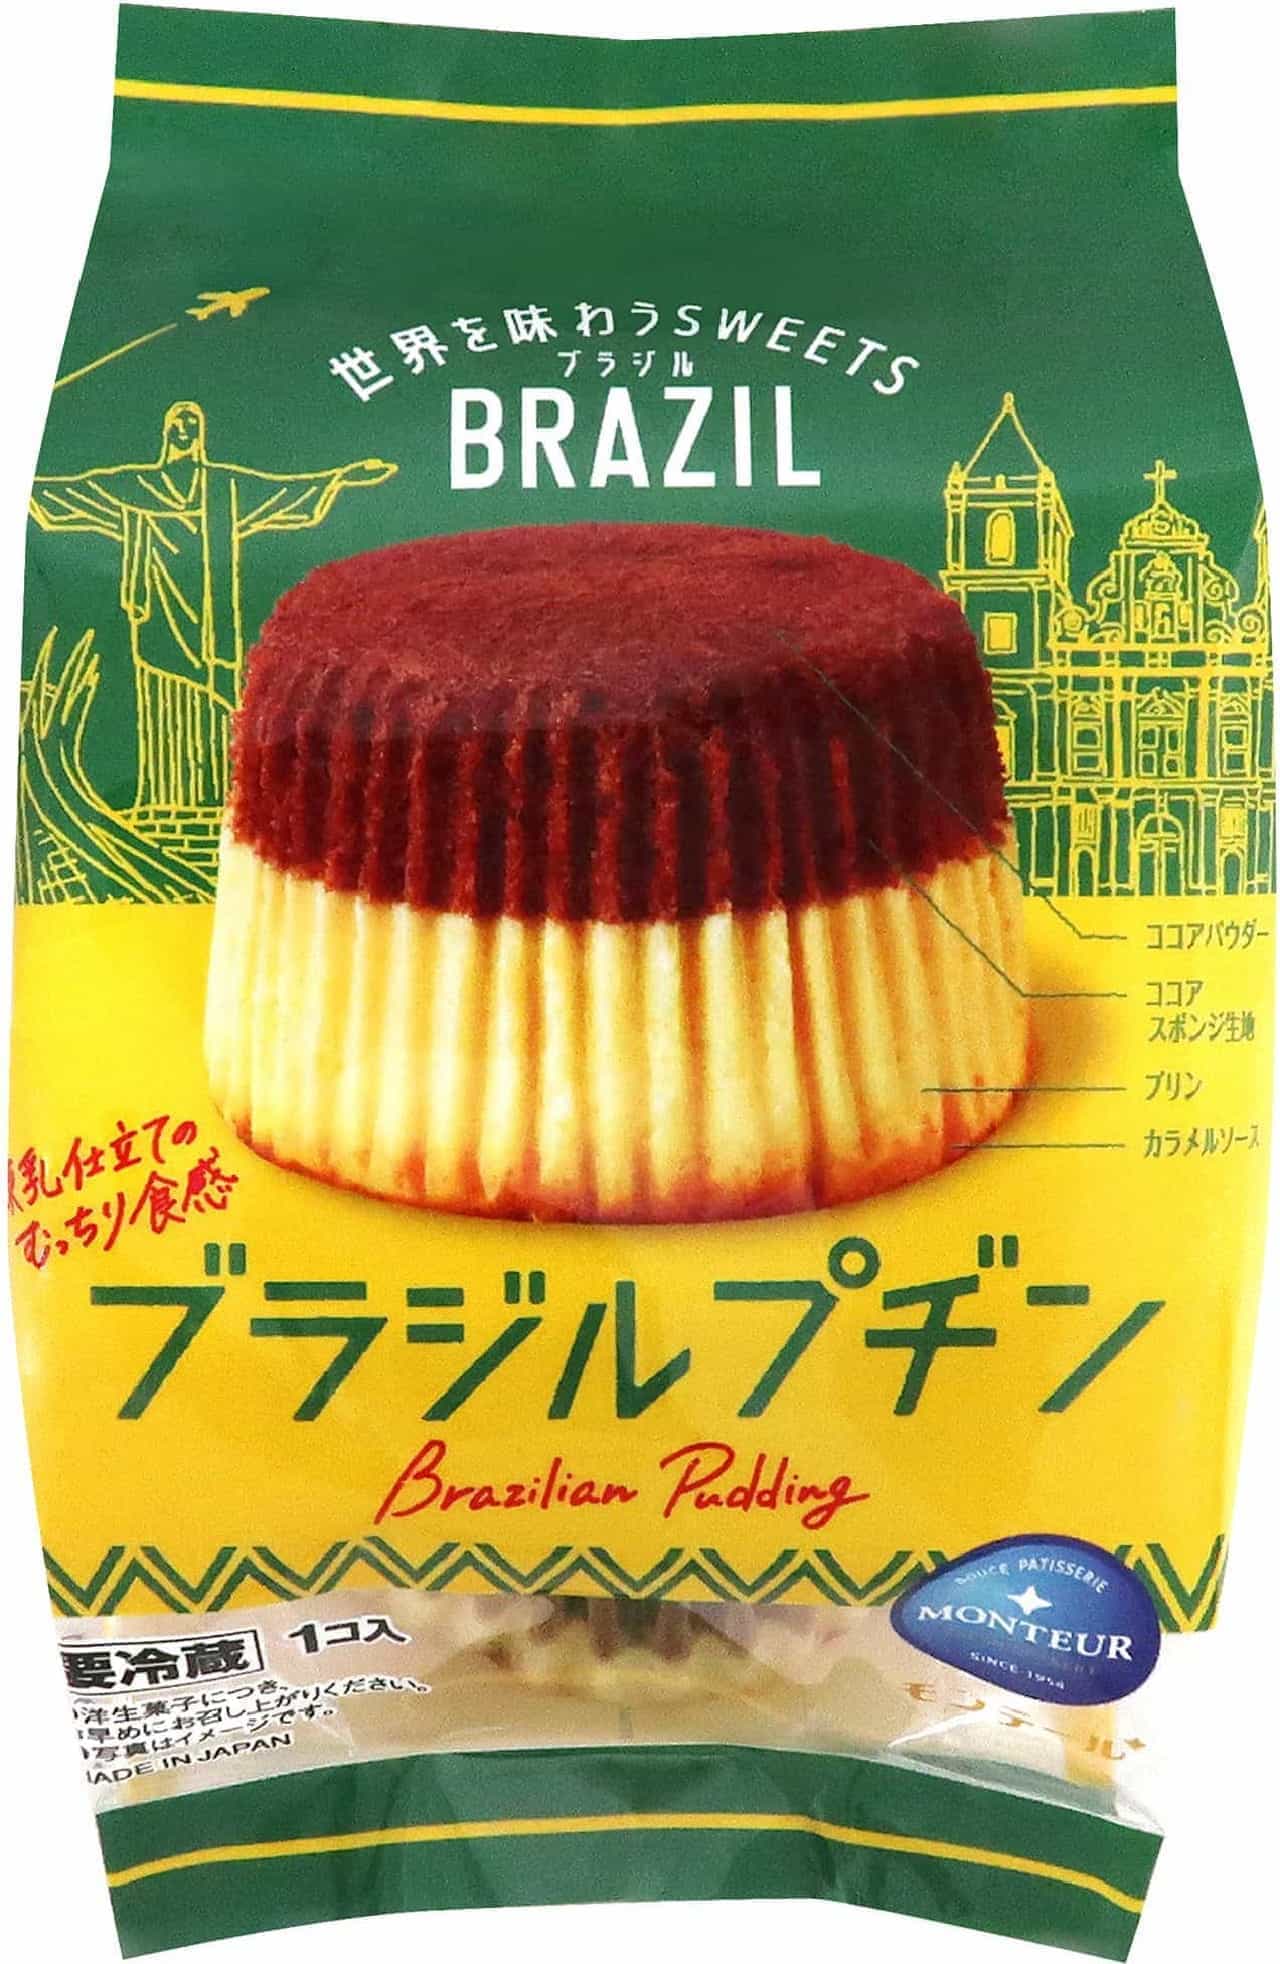 Montale "Brazilian Pudding"